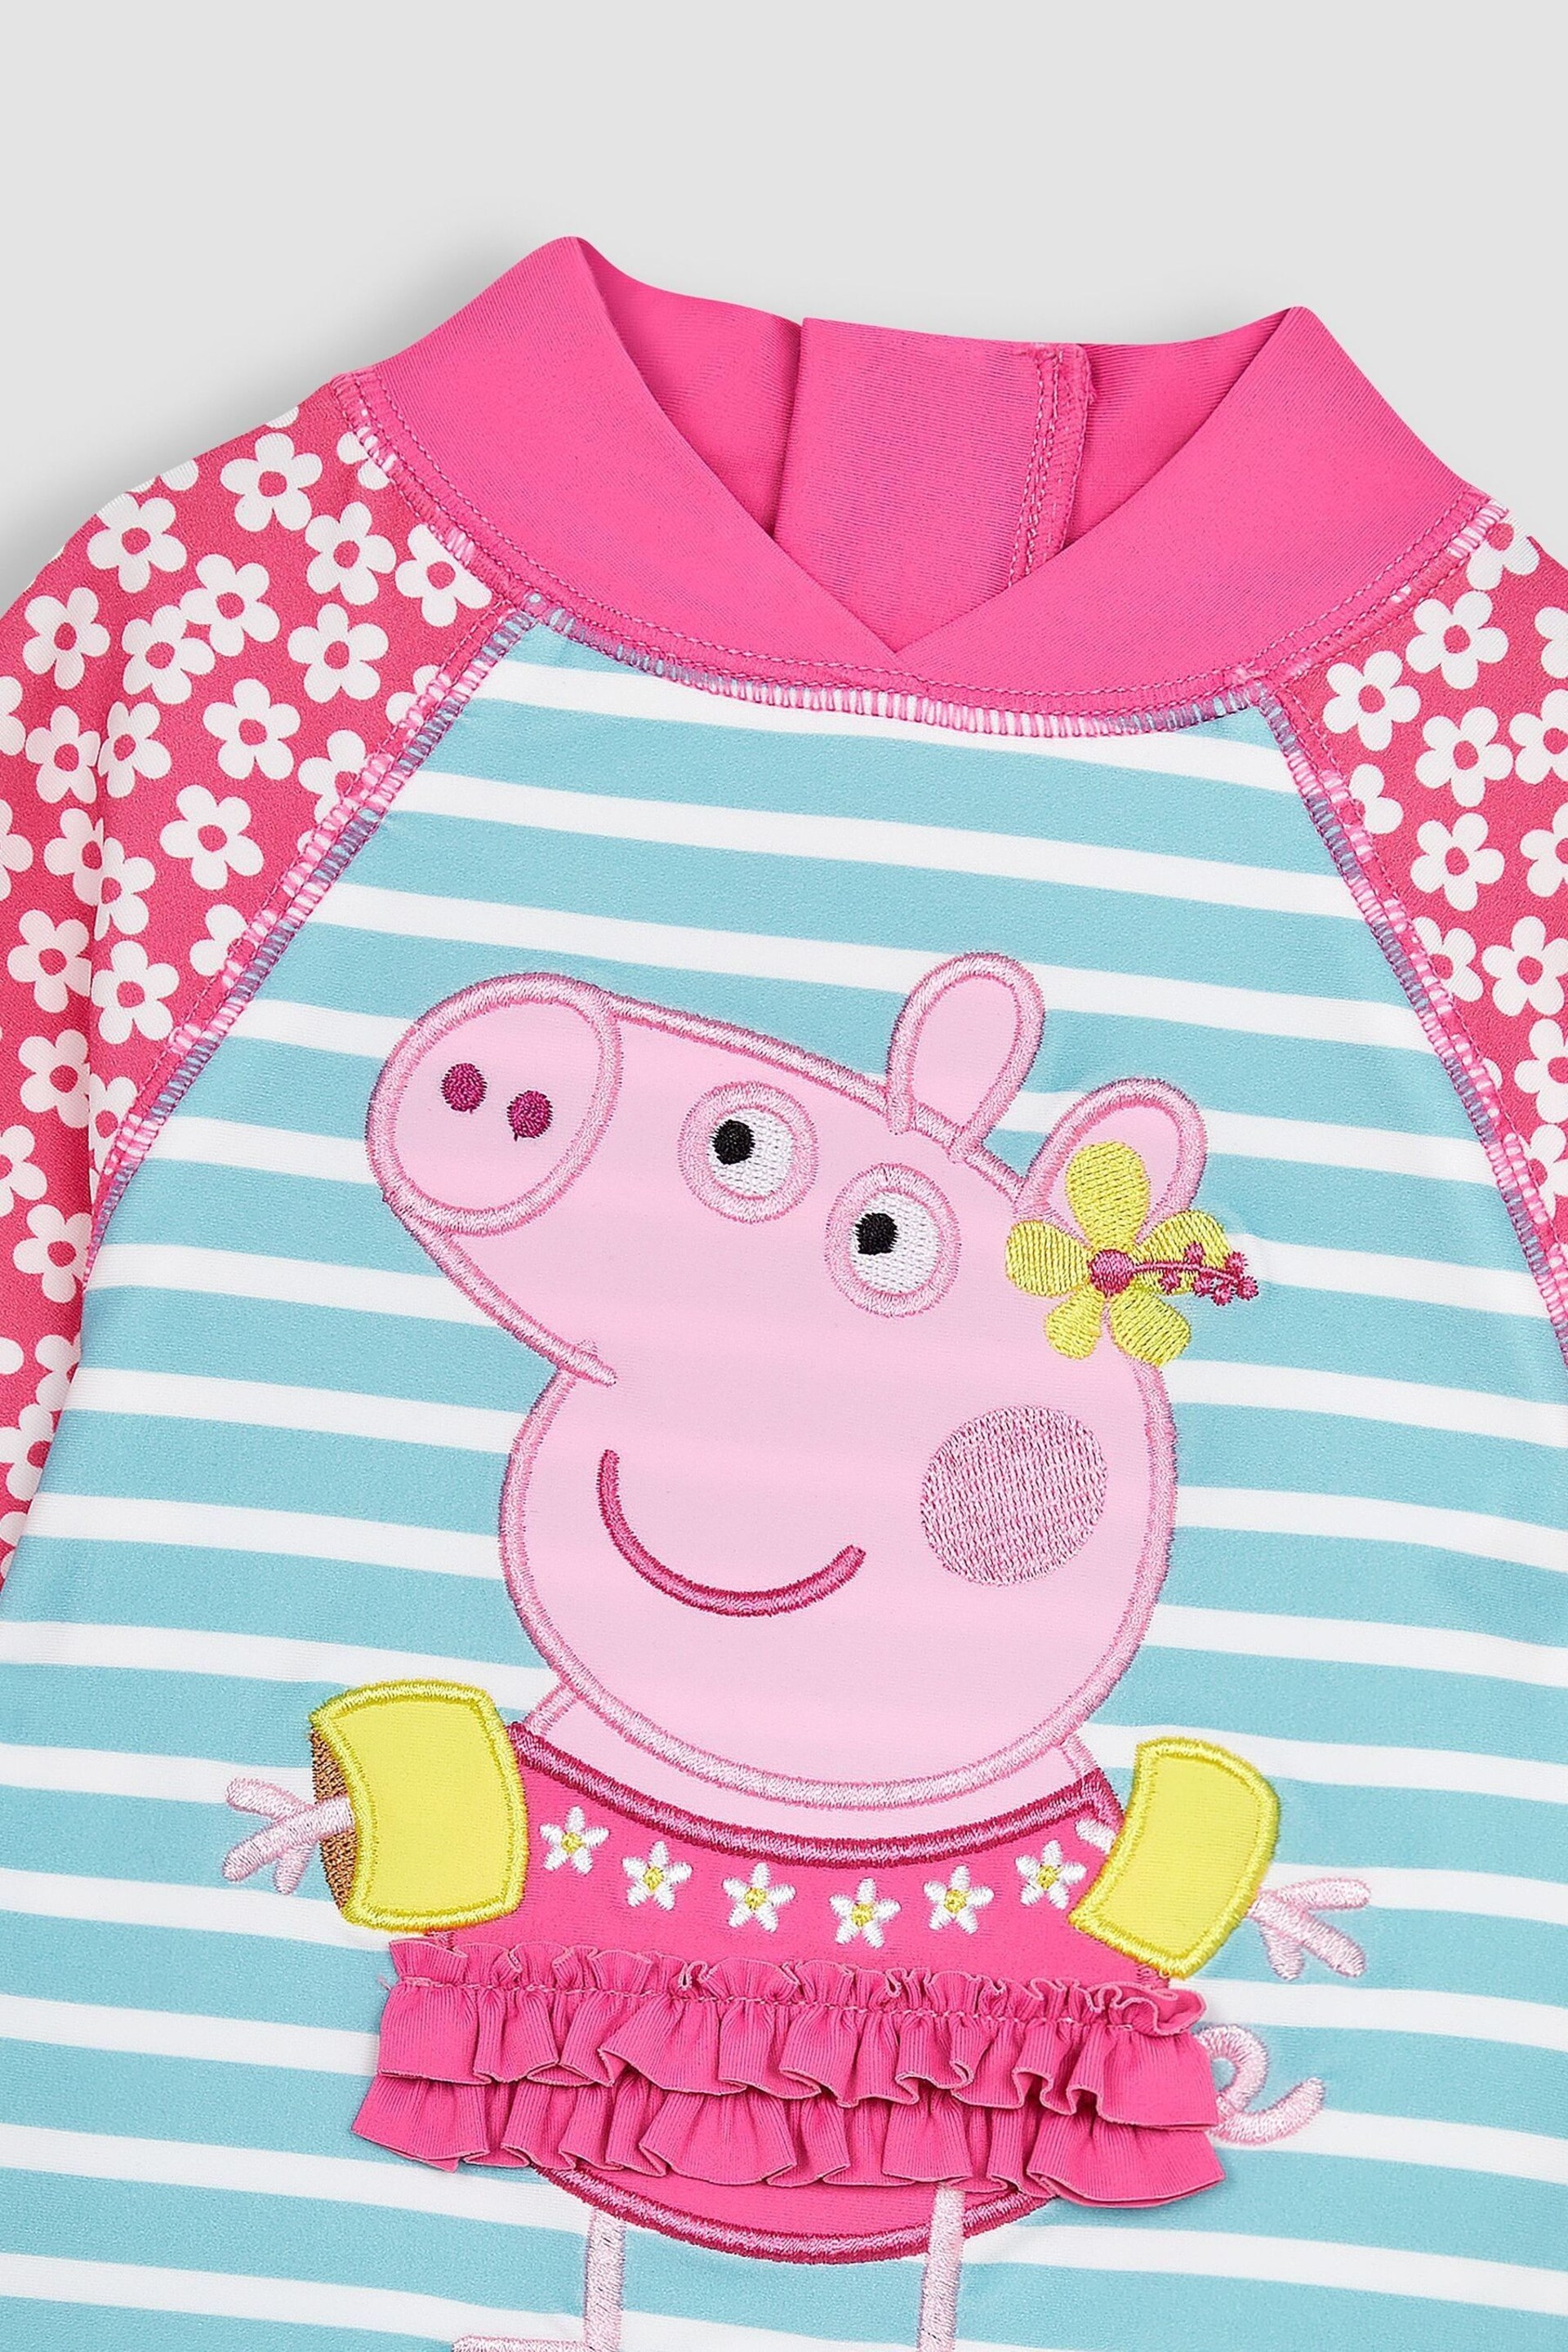 JoJo Maman Bébé Pink Peppa Pig UPF 50 1-Piece Sun Protection Suit - Image 5 of 6